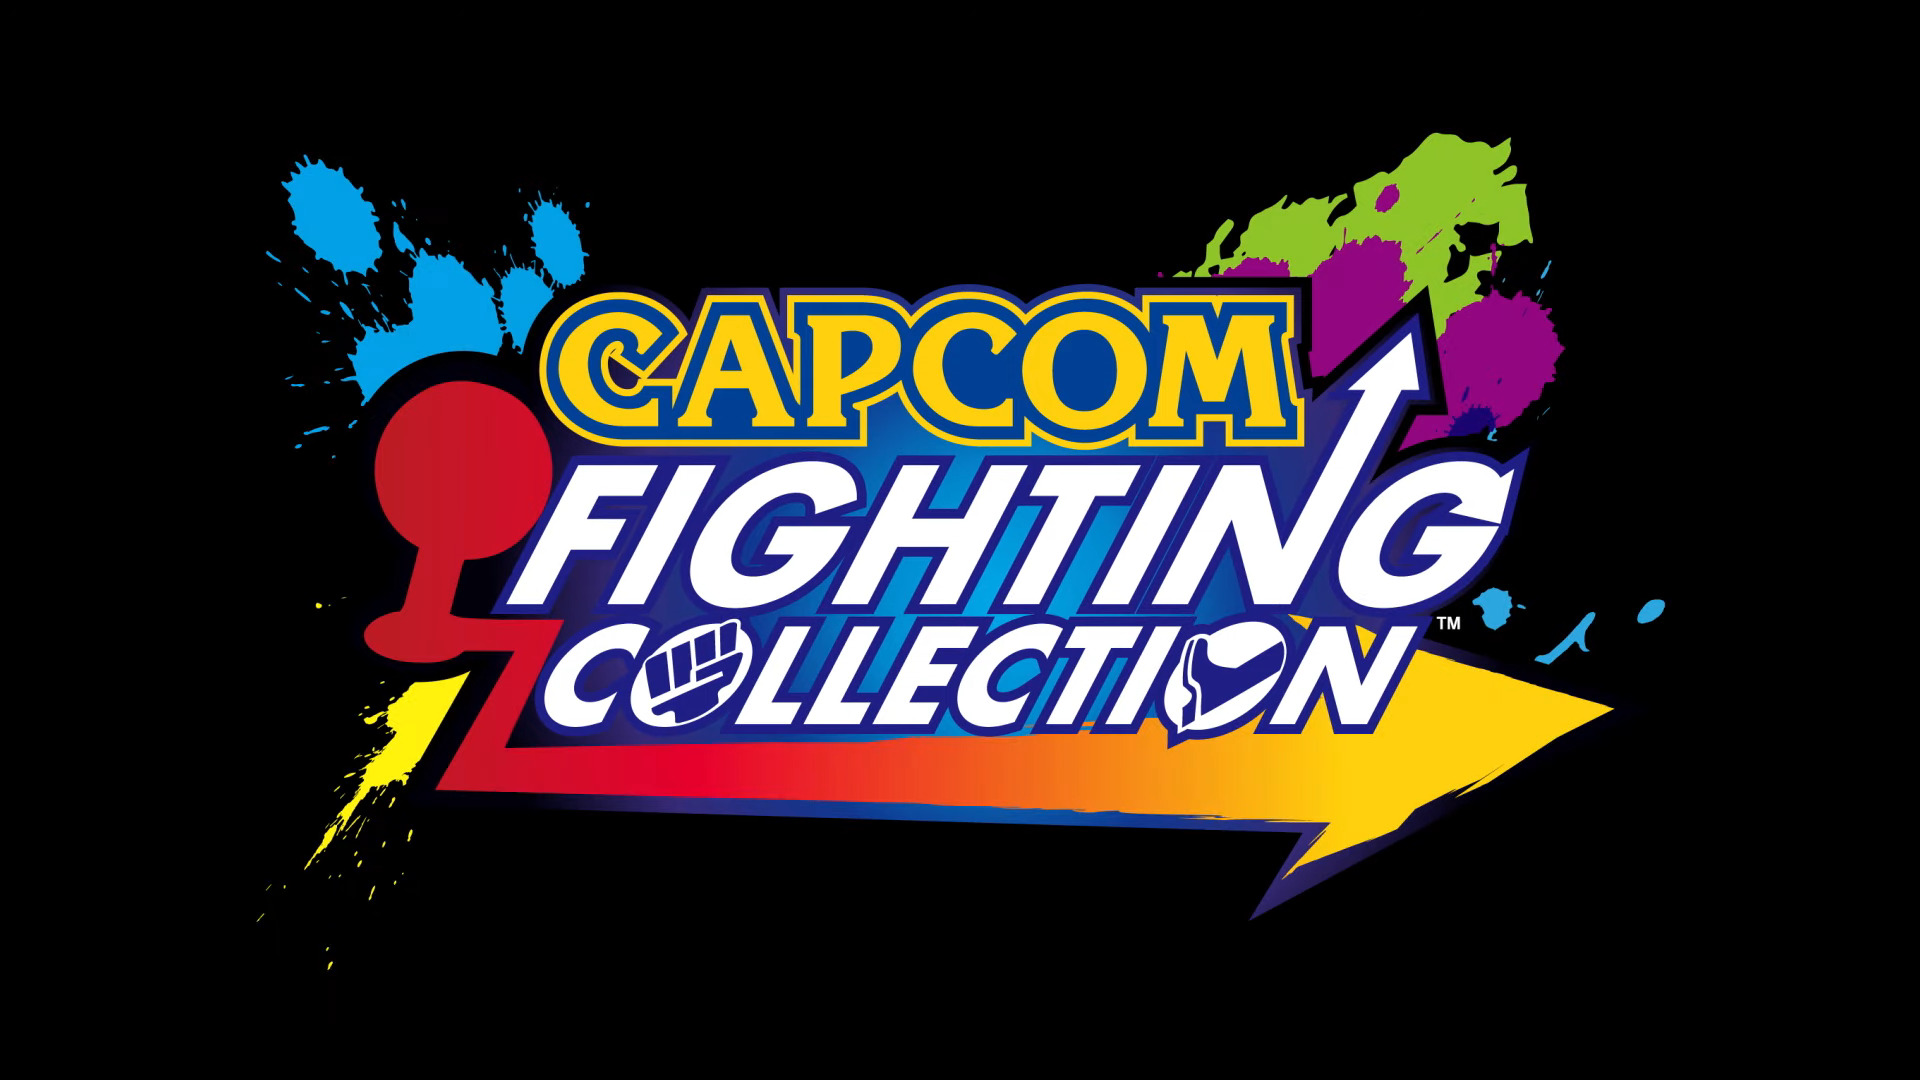 Capcom Fighting Collection วางจำหน่ายแล้วบน PC, PS4, Xbox One และ Nintendo Switch